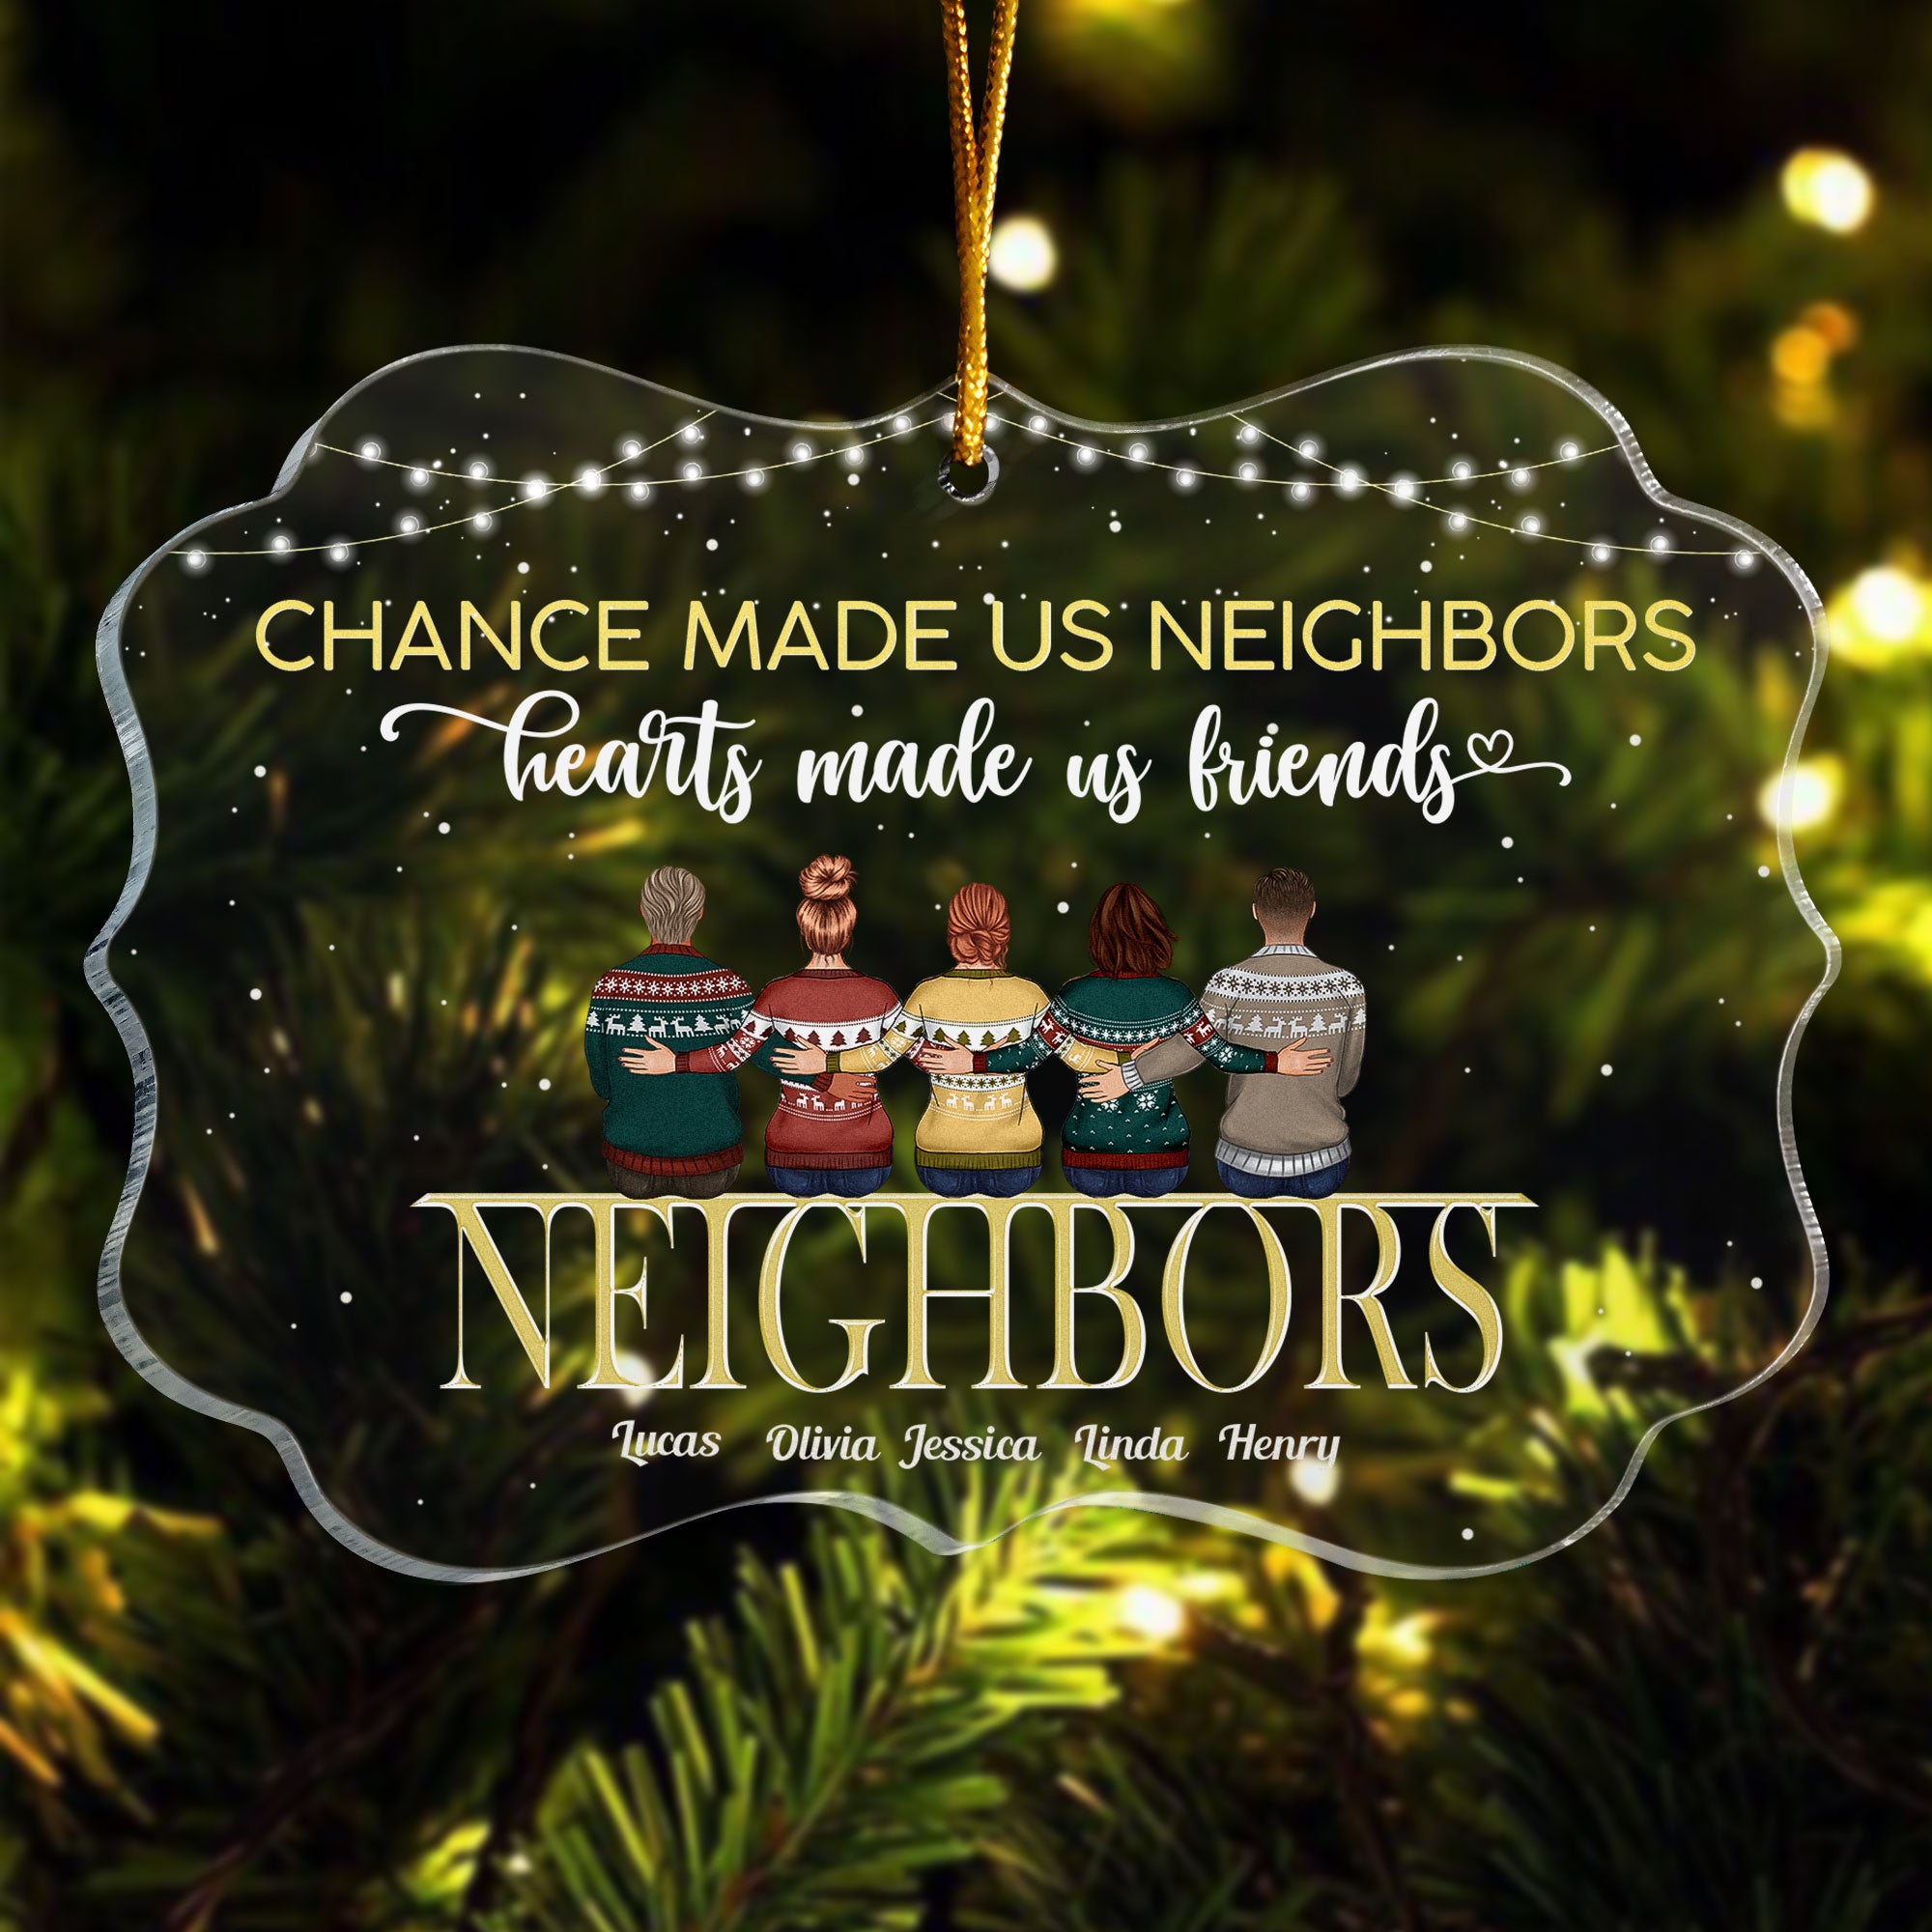 Chance Made Us Neighbors Hearts Made Us Friends Neighbor 